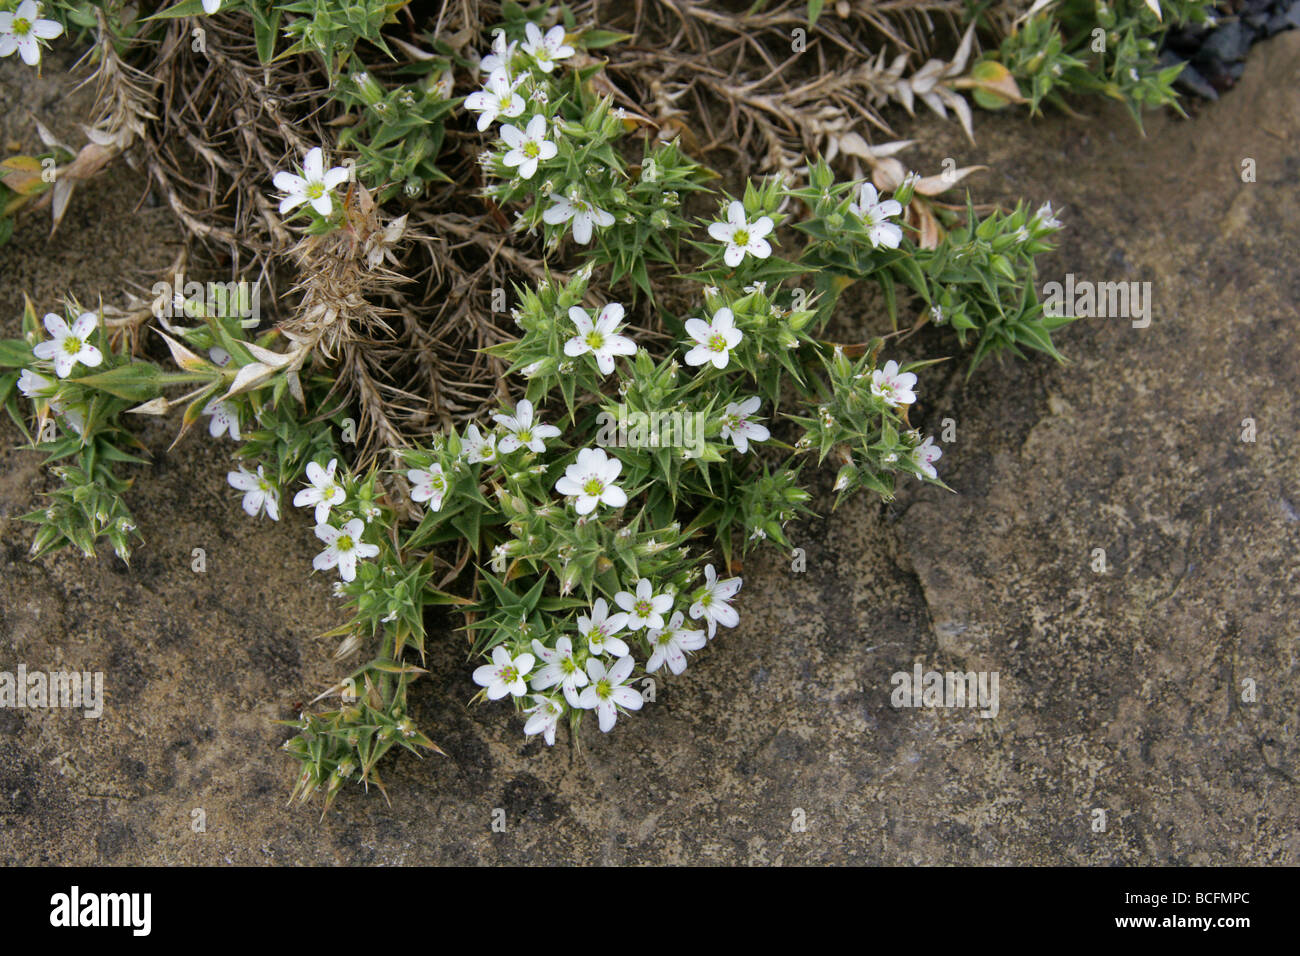 Irish Moss or Sandwort, Arenaria dyris, Caryophyllaceae, Morocco Stock Photo